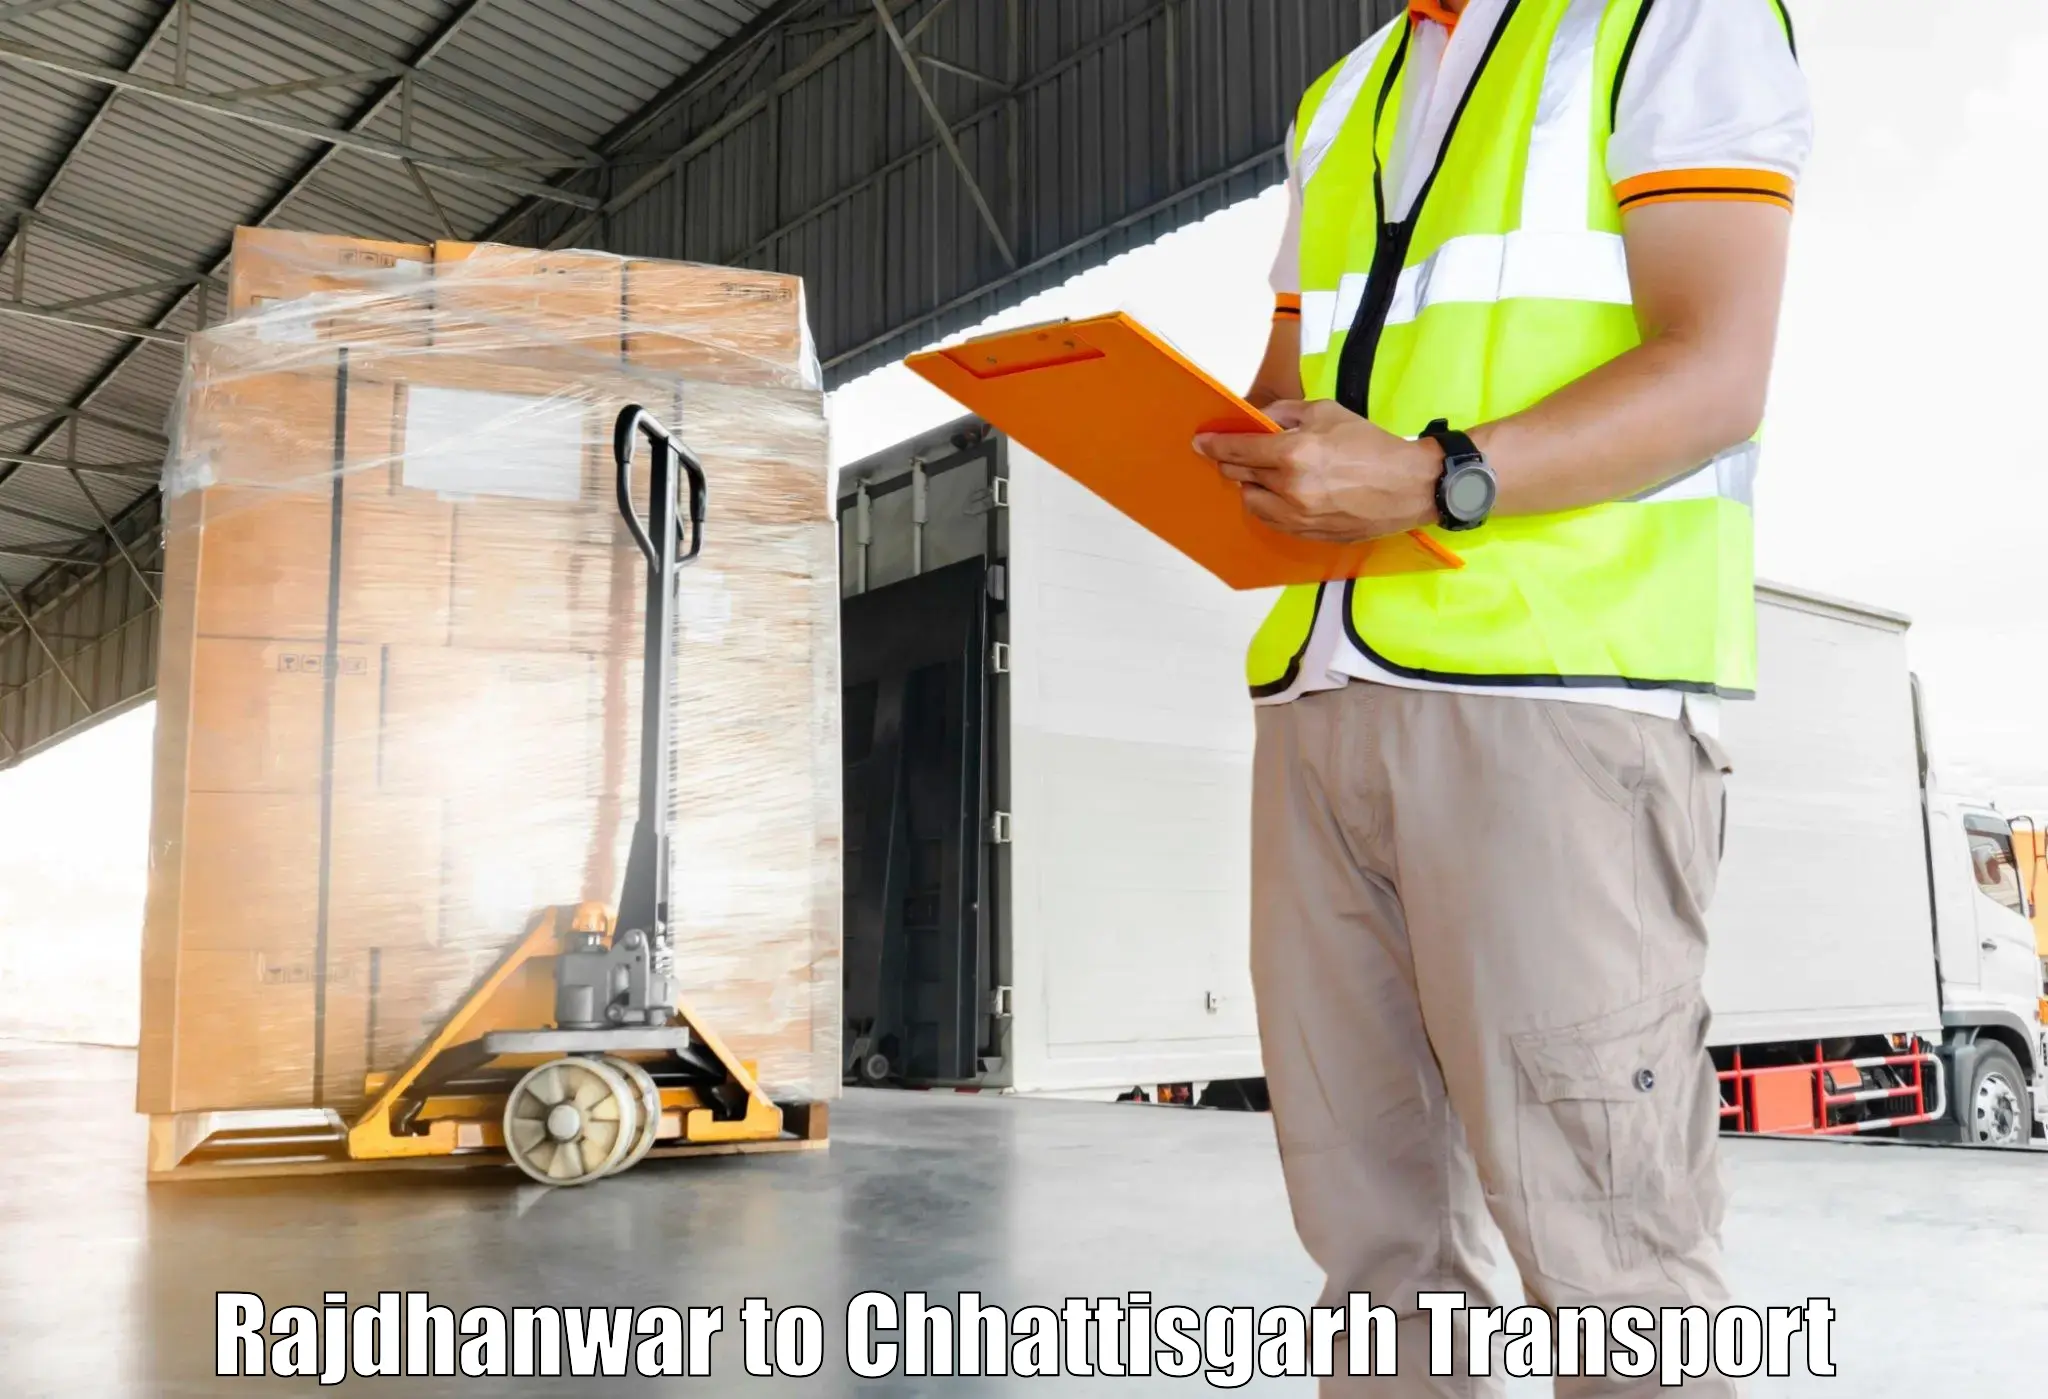 Truck transport companies in India Rajdhanwar to bagbahra